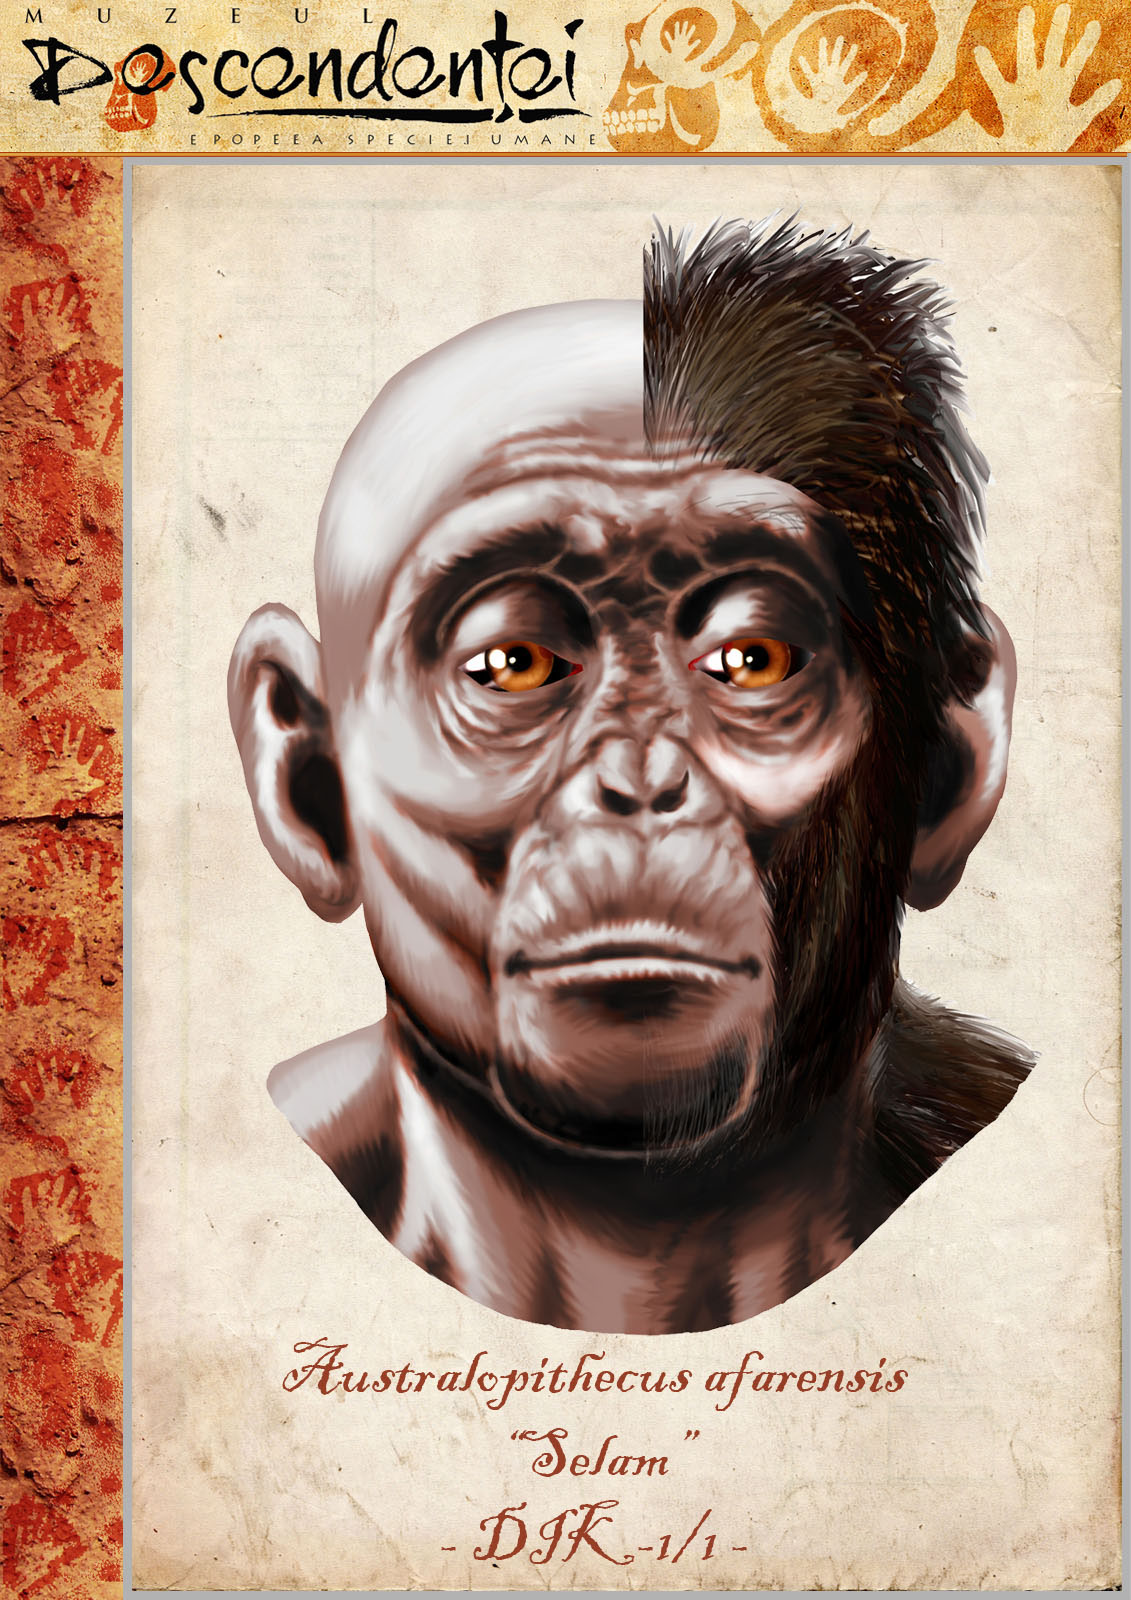 australopithecus afarensis selam dikika human evolution homo hominid sahelanthropus ardipithecus paranthropus habilis erectus ergaster floresiensis